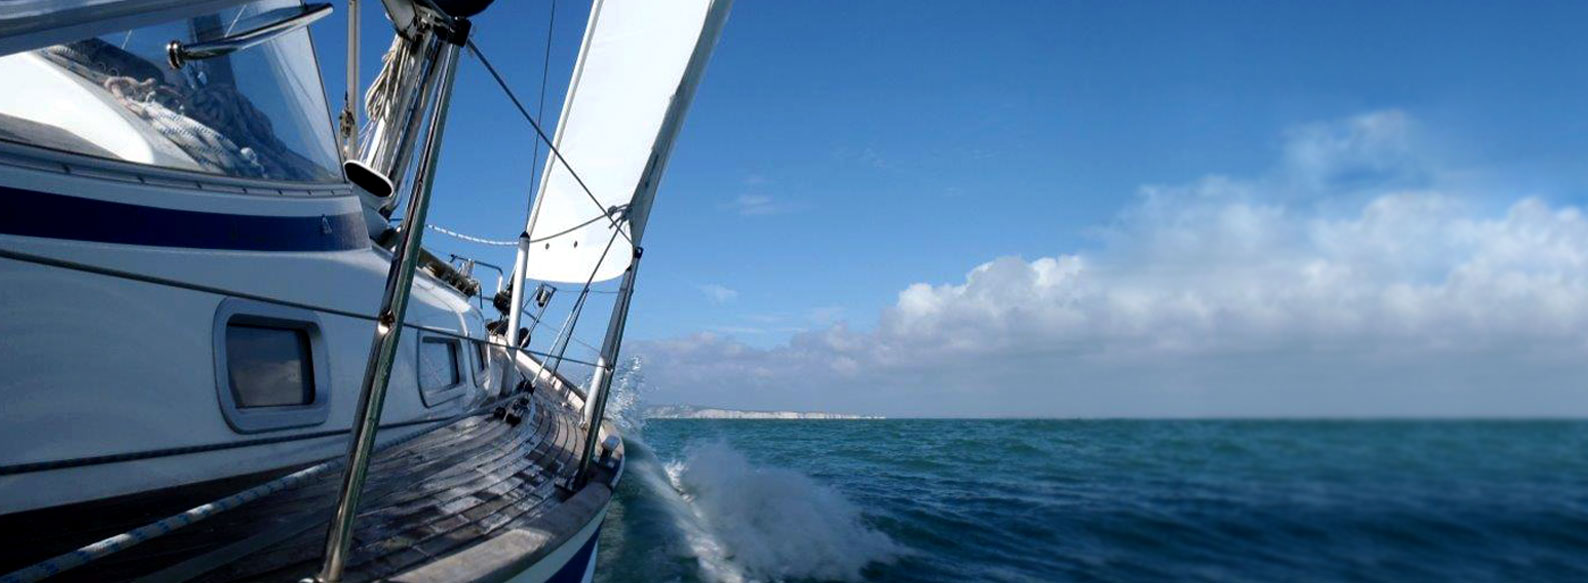 RYA Courses and Sail Training at Hamble Point Sailing School